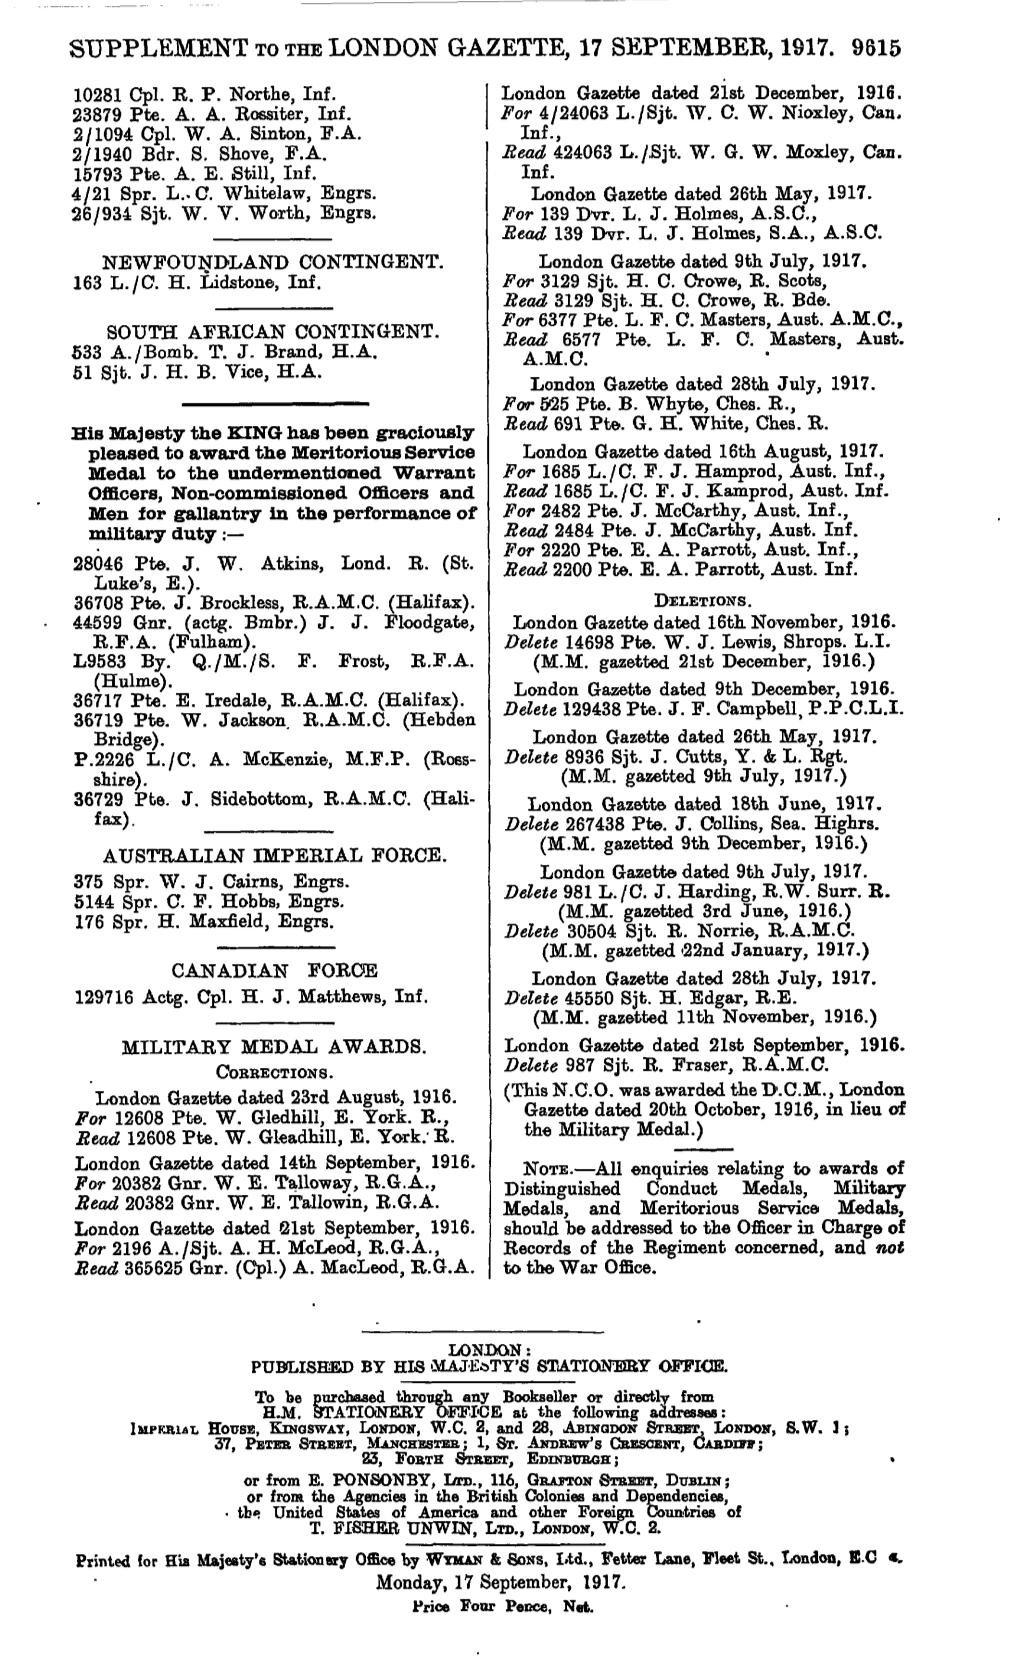 Supplement to the London Gazette, 17 September, 1917